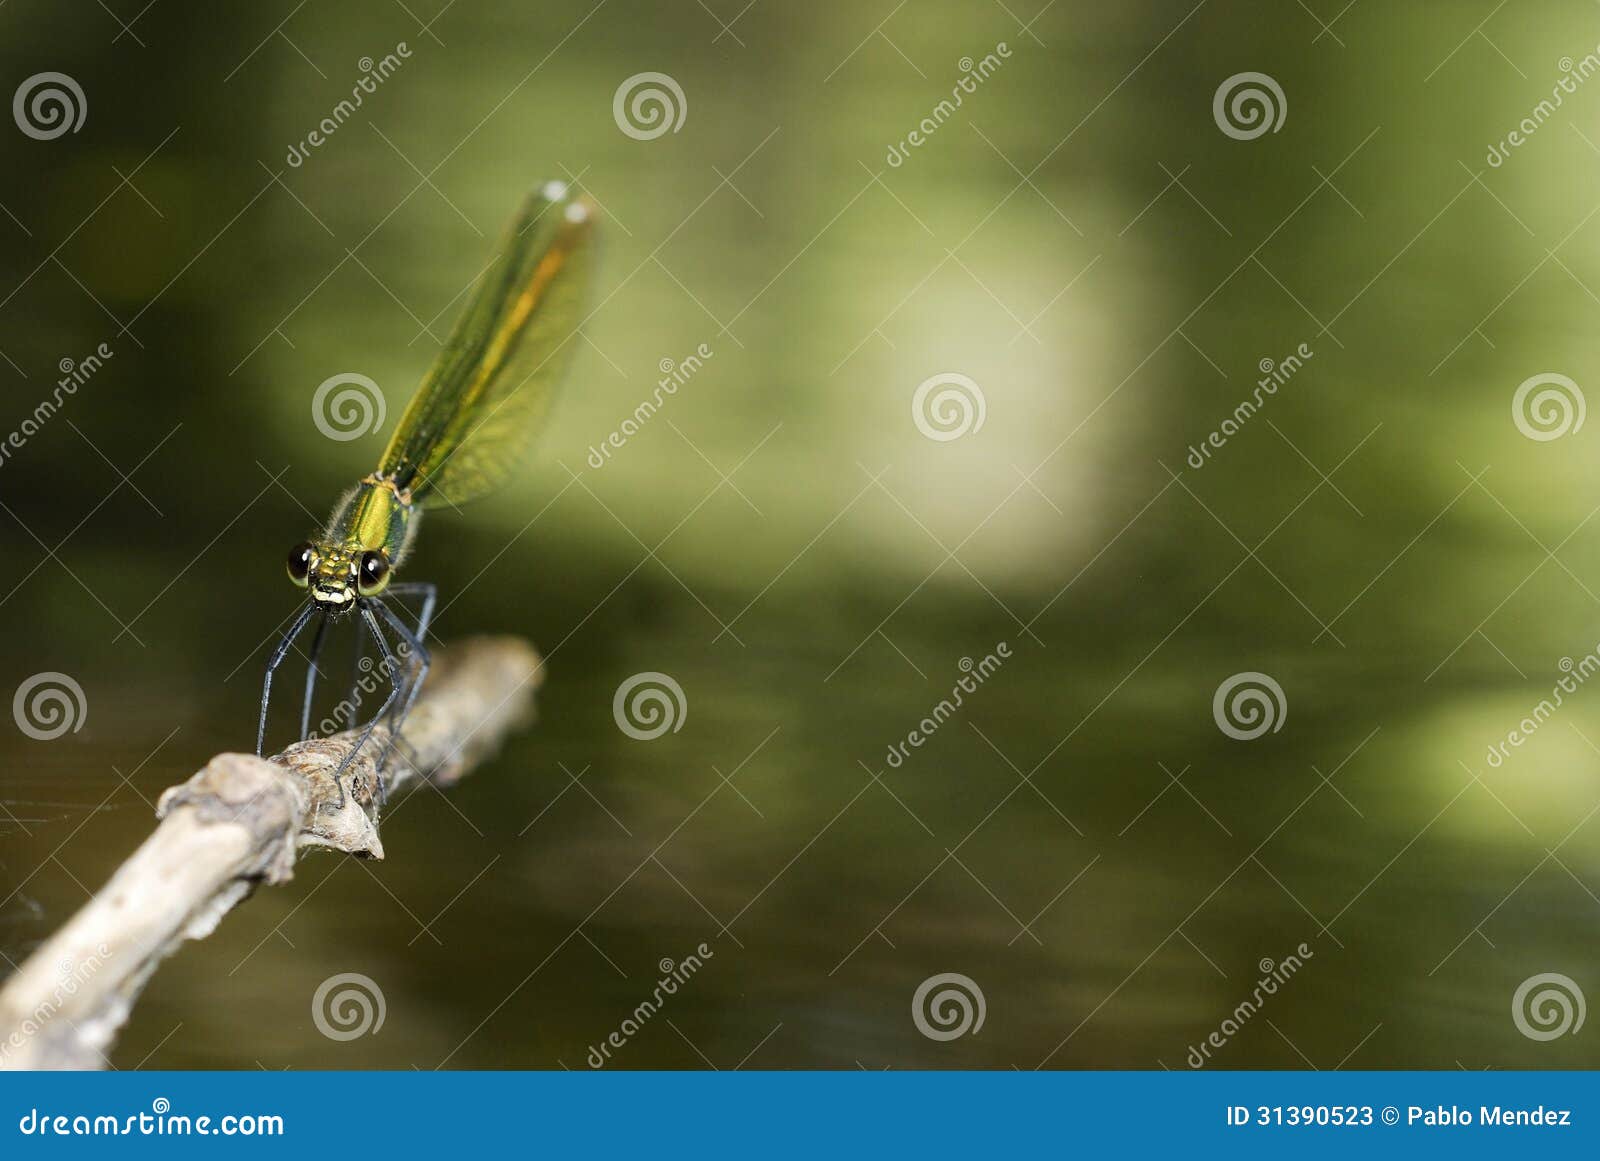 dragonfly (calopteryx splendens) in villarcayo, burgos, spain